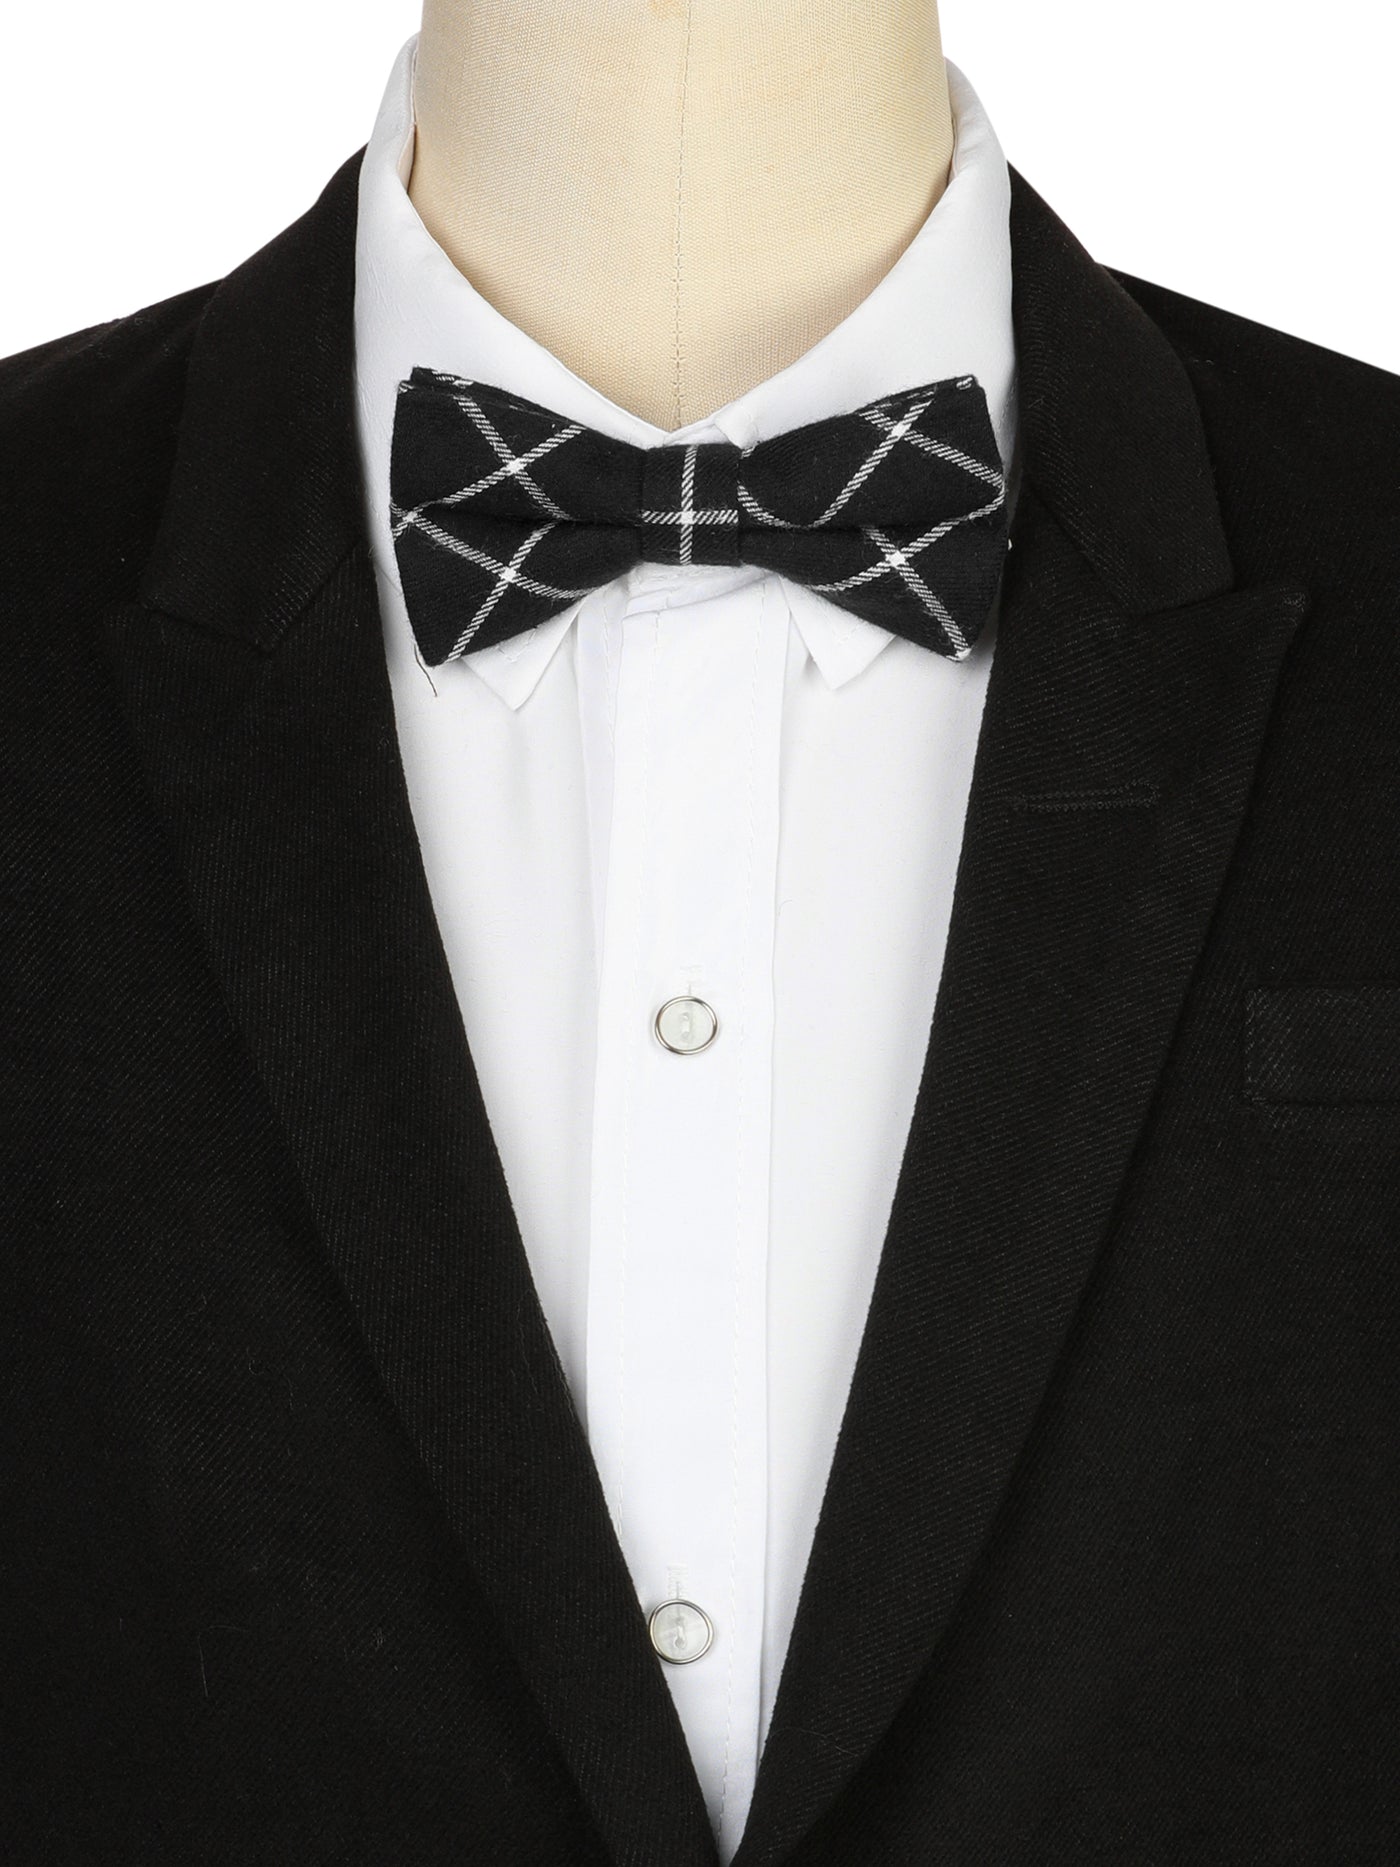 Bublédon Men's Striped Pre-tied Bow Ties Tuxedo Business Wedding Adjustable Linen Bowties